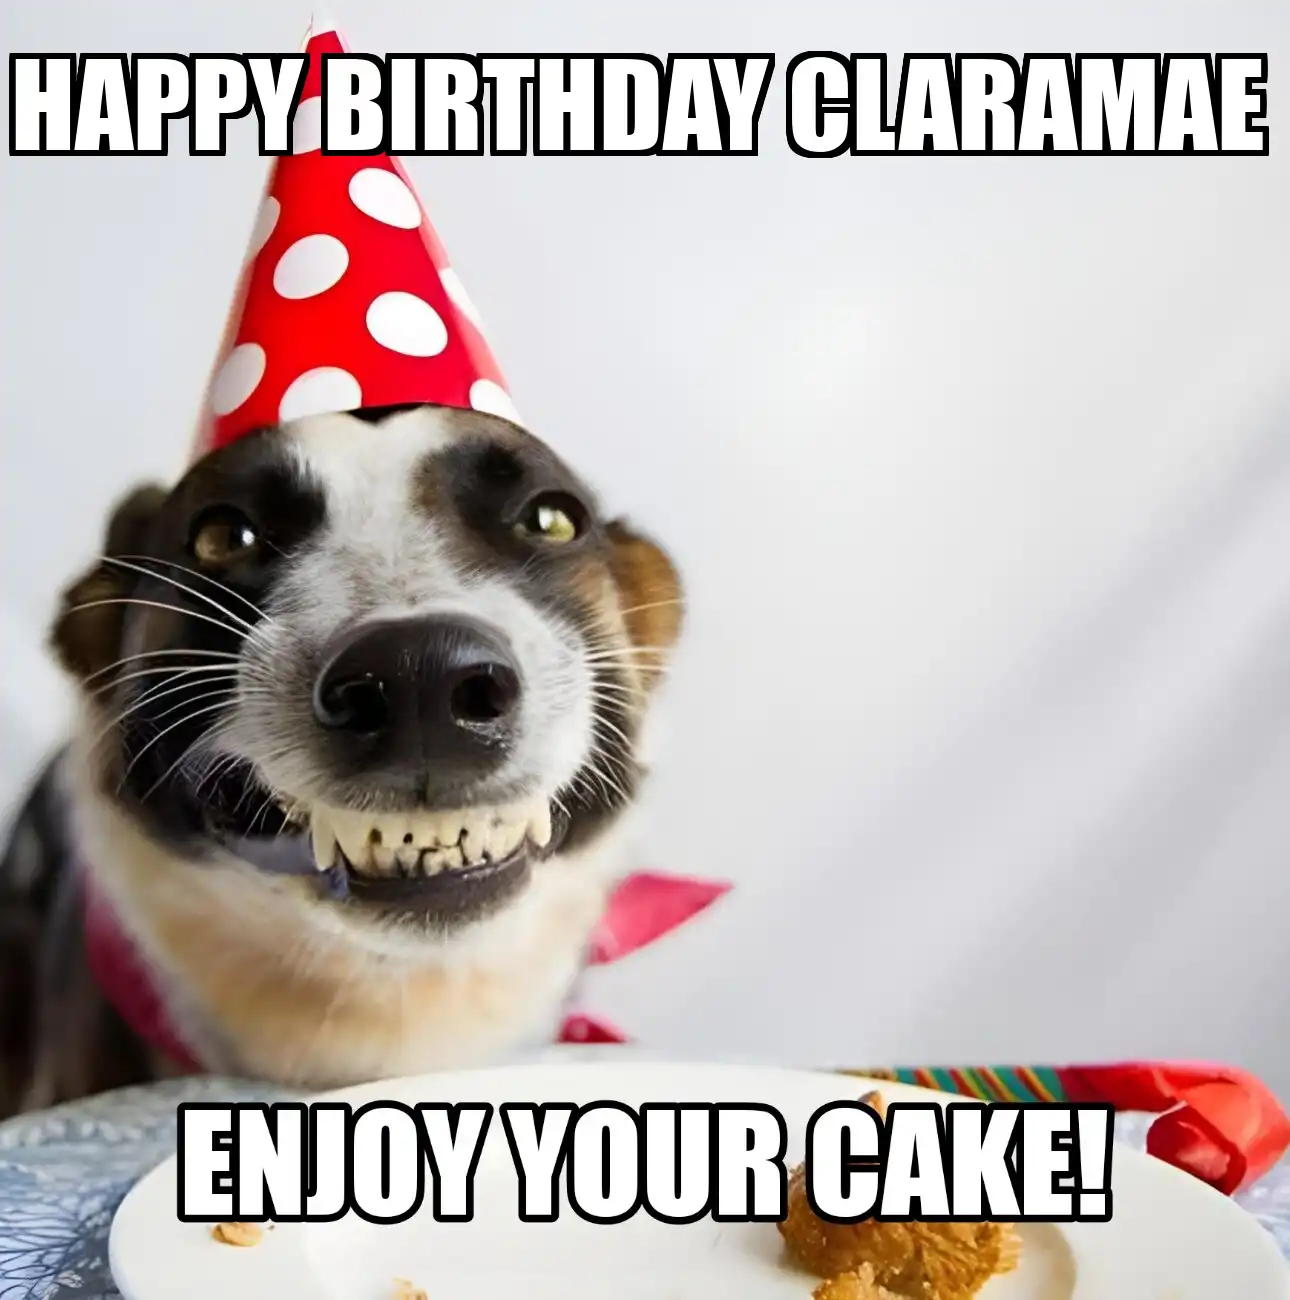 Happy Birthday Claramae Enjoy Your Cake Dog Meme